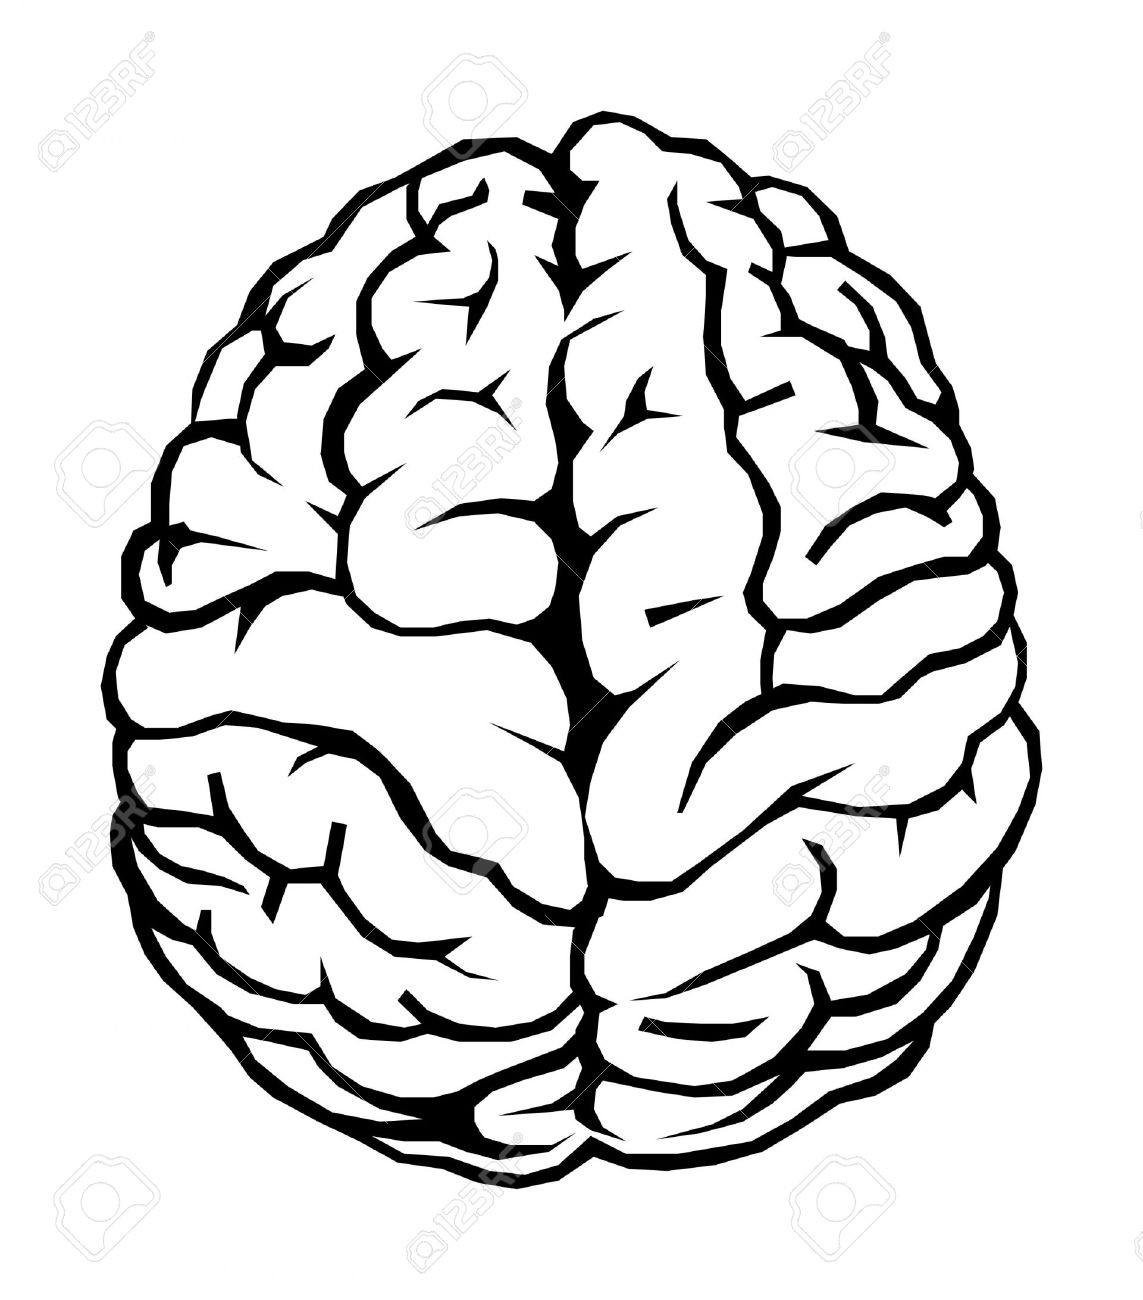 Brain clipart printable. Black and white diagram